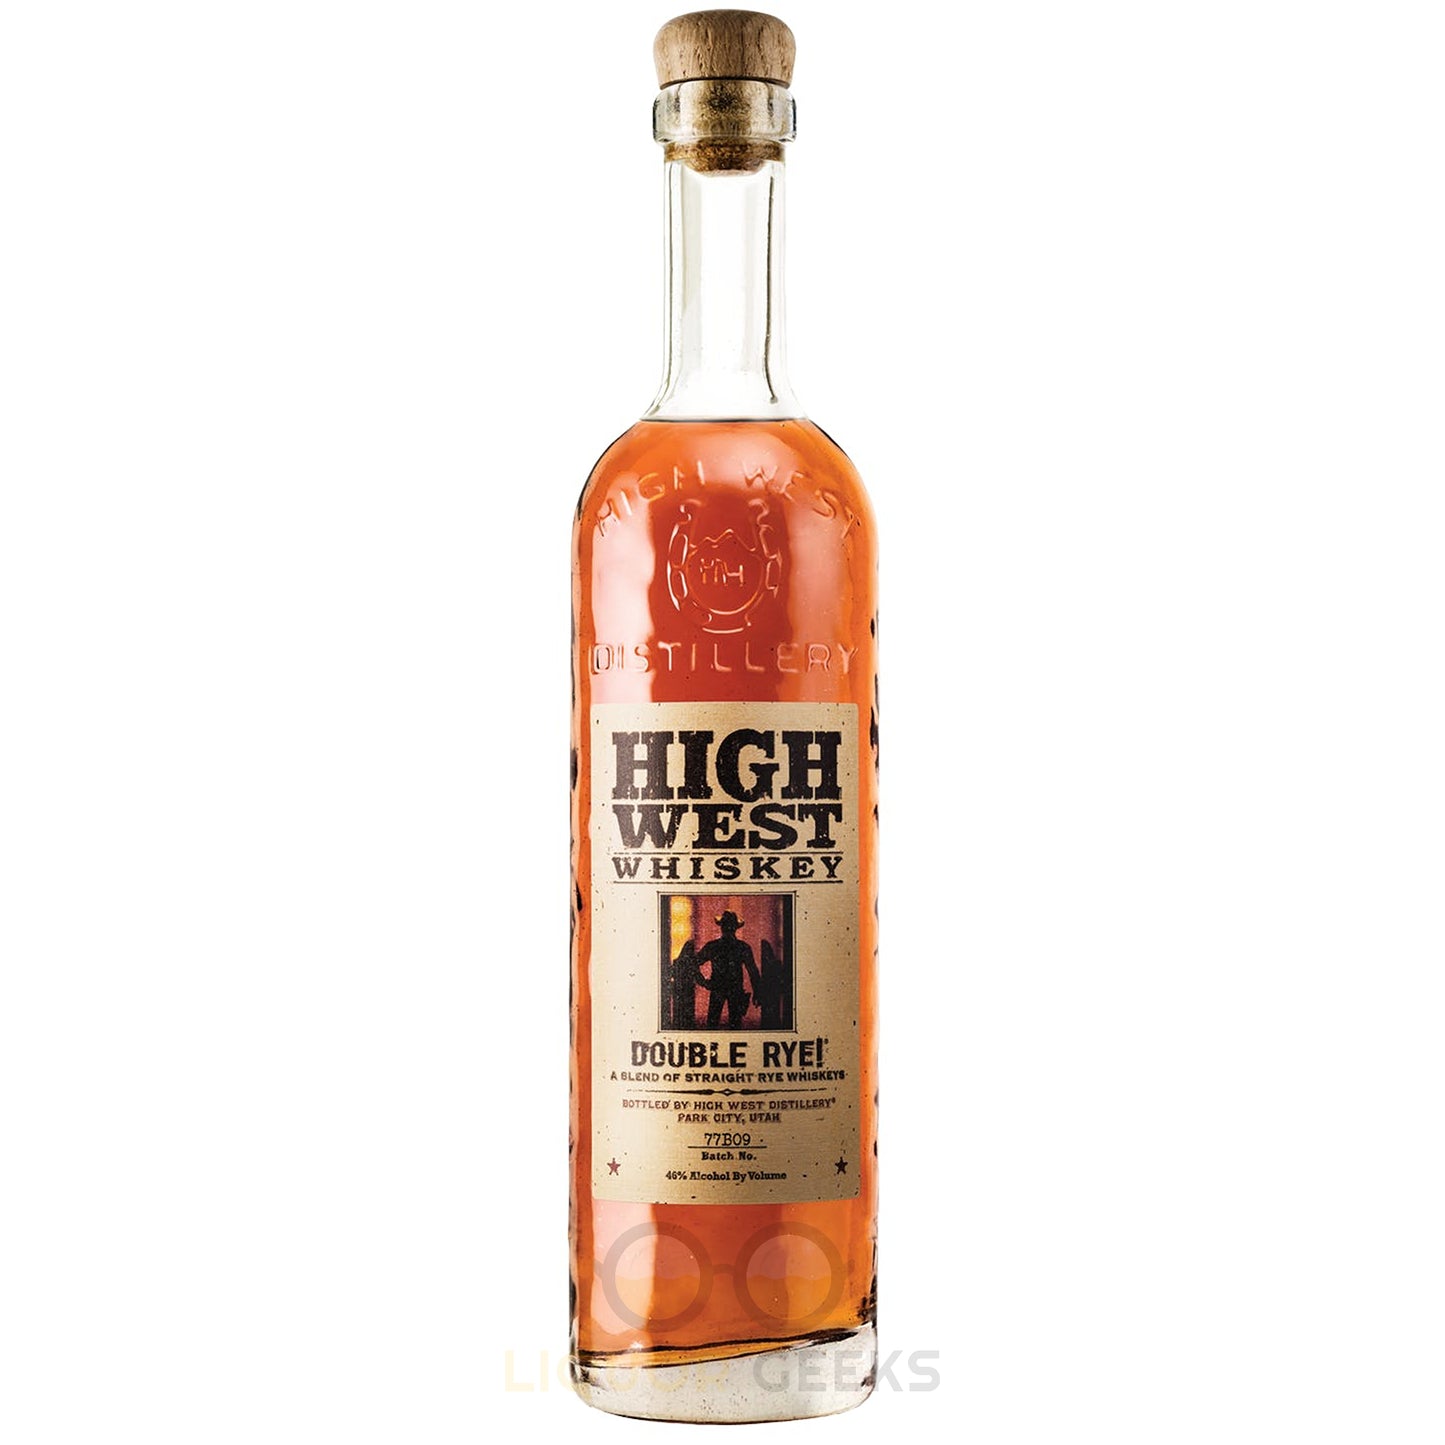 High West Double Rye Whiskey - Liquor Geeks